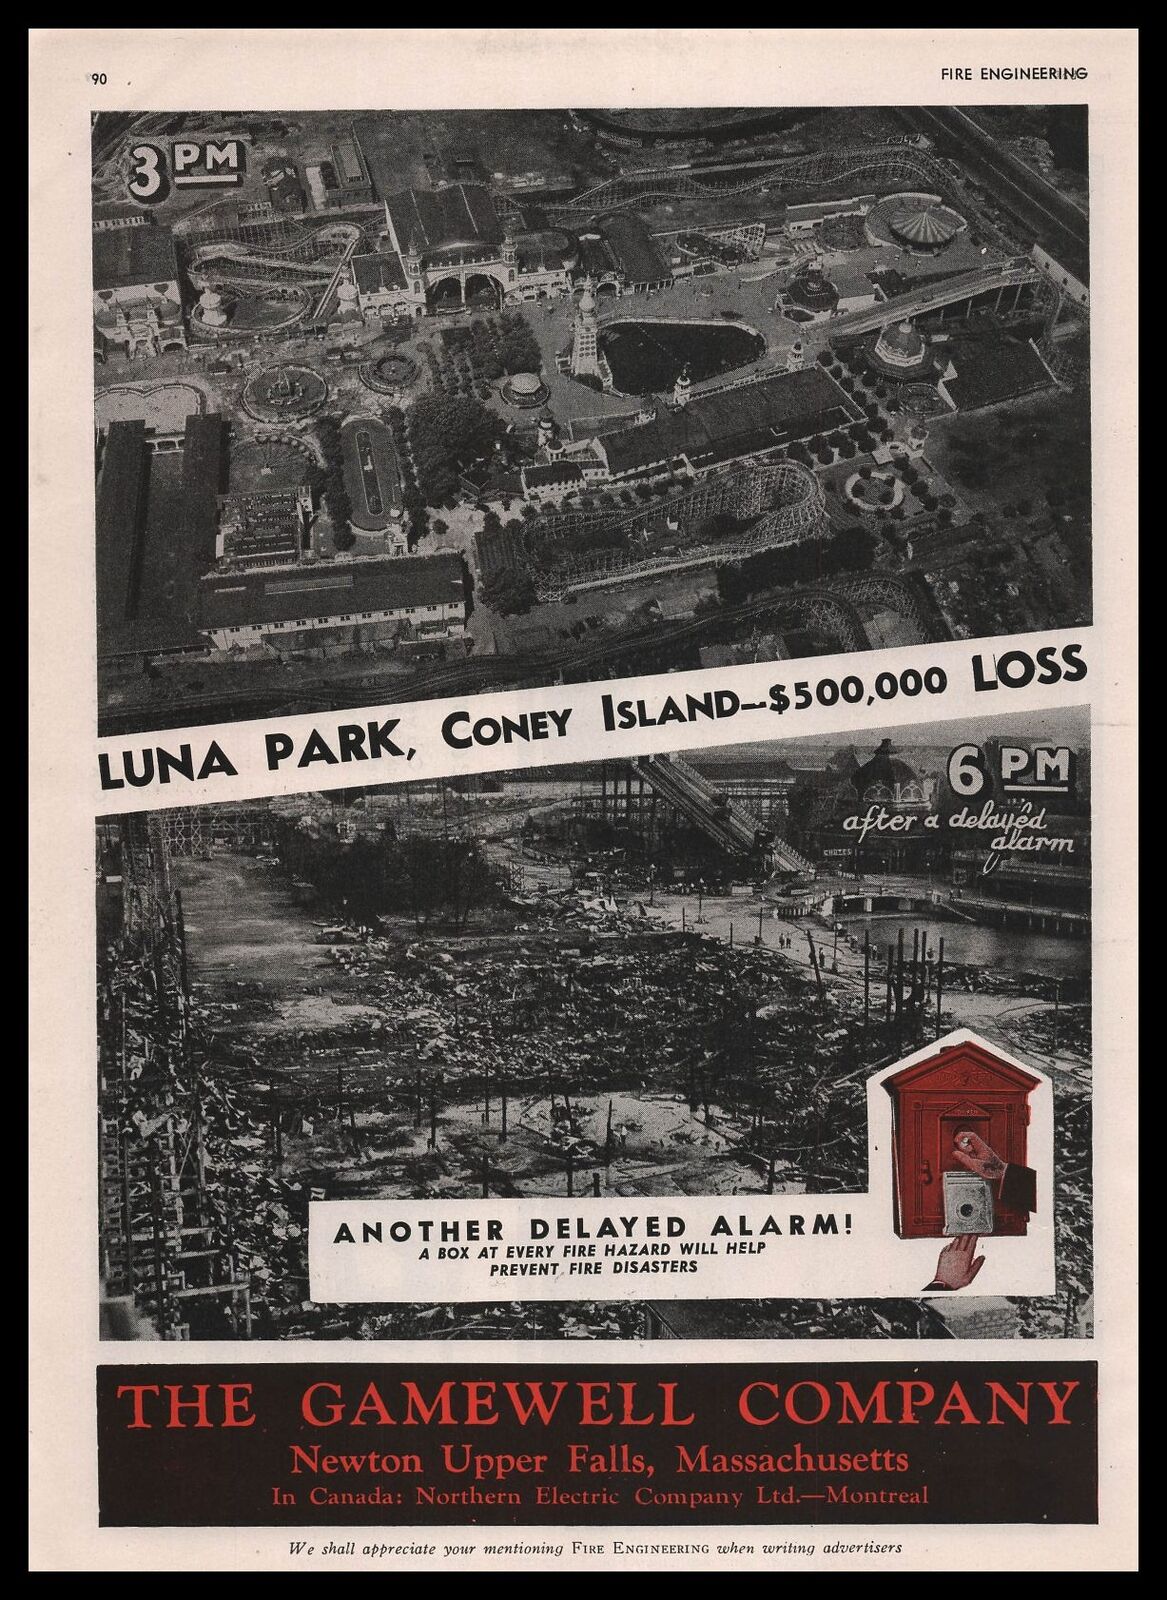 1945 Gamewell Alarm Photos Of Fire At Luna Park Coney Island New York Print Ad